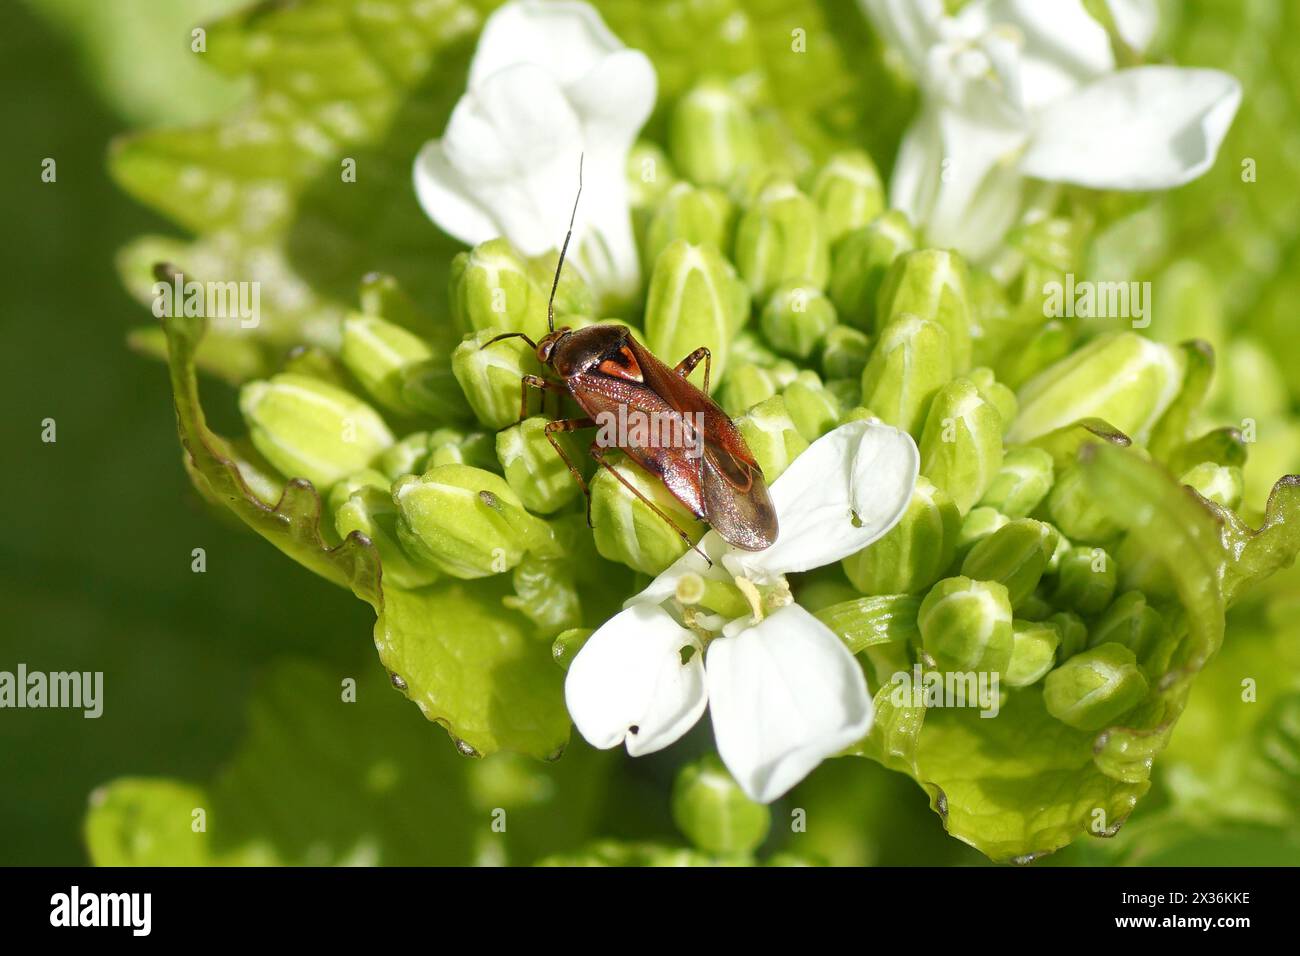 Small plantbug Lygus pratensis, family Plant Bugs Miridae. On flowers, buds of garlic mustard (Alliaria petiolata), family Brassicaceae, Cruciferae. Stock Photo